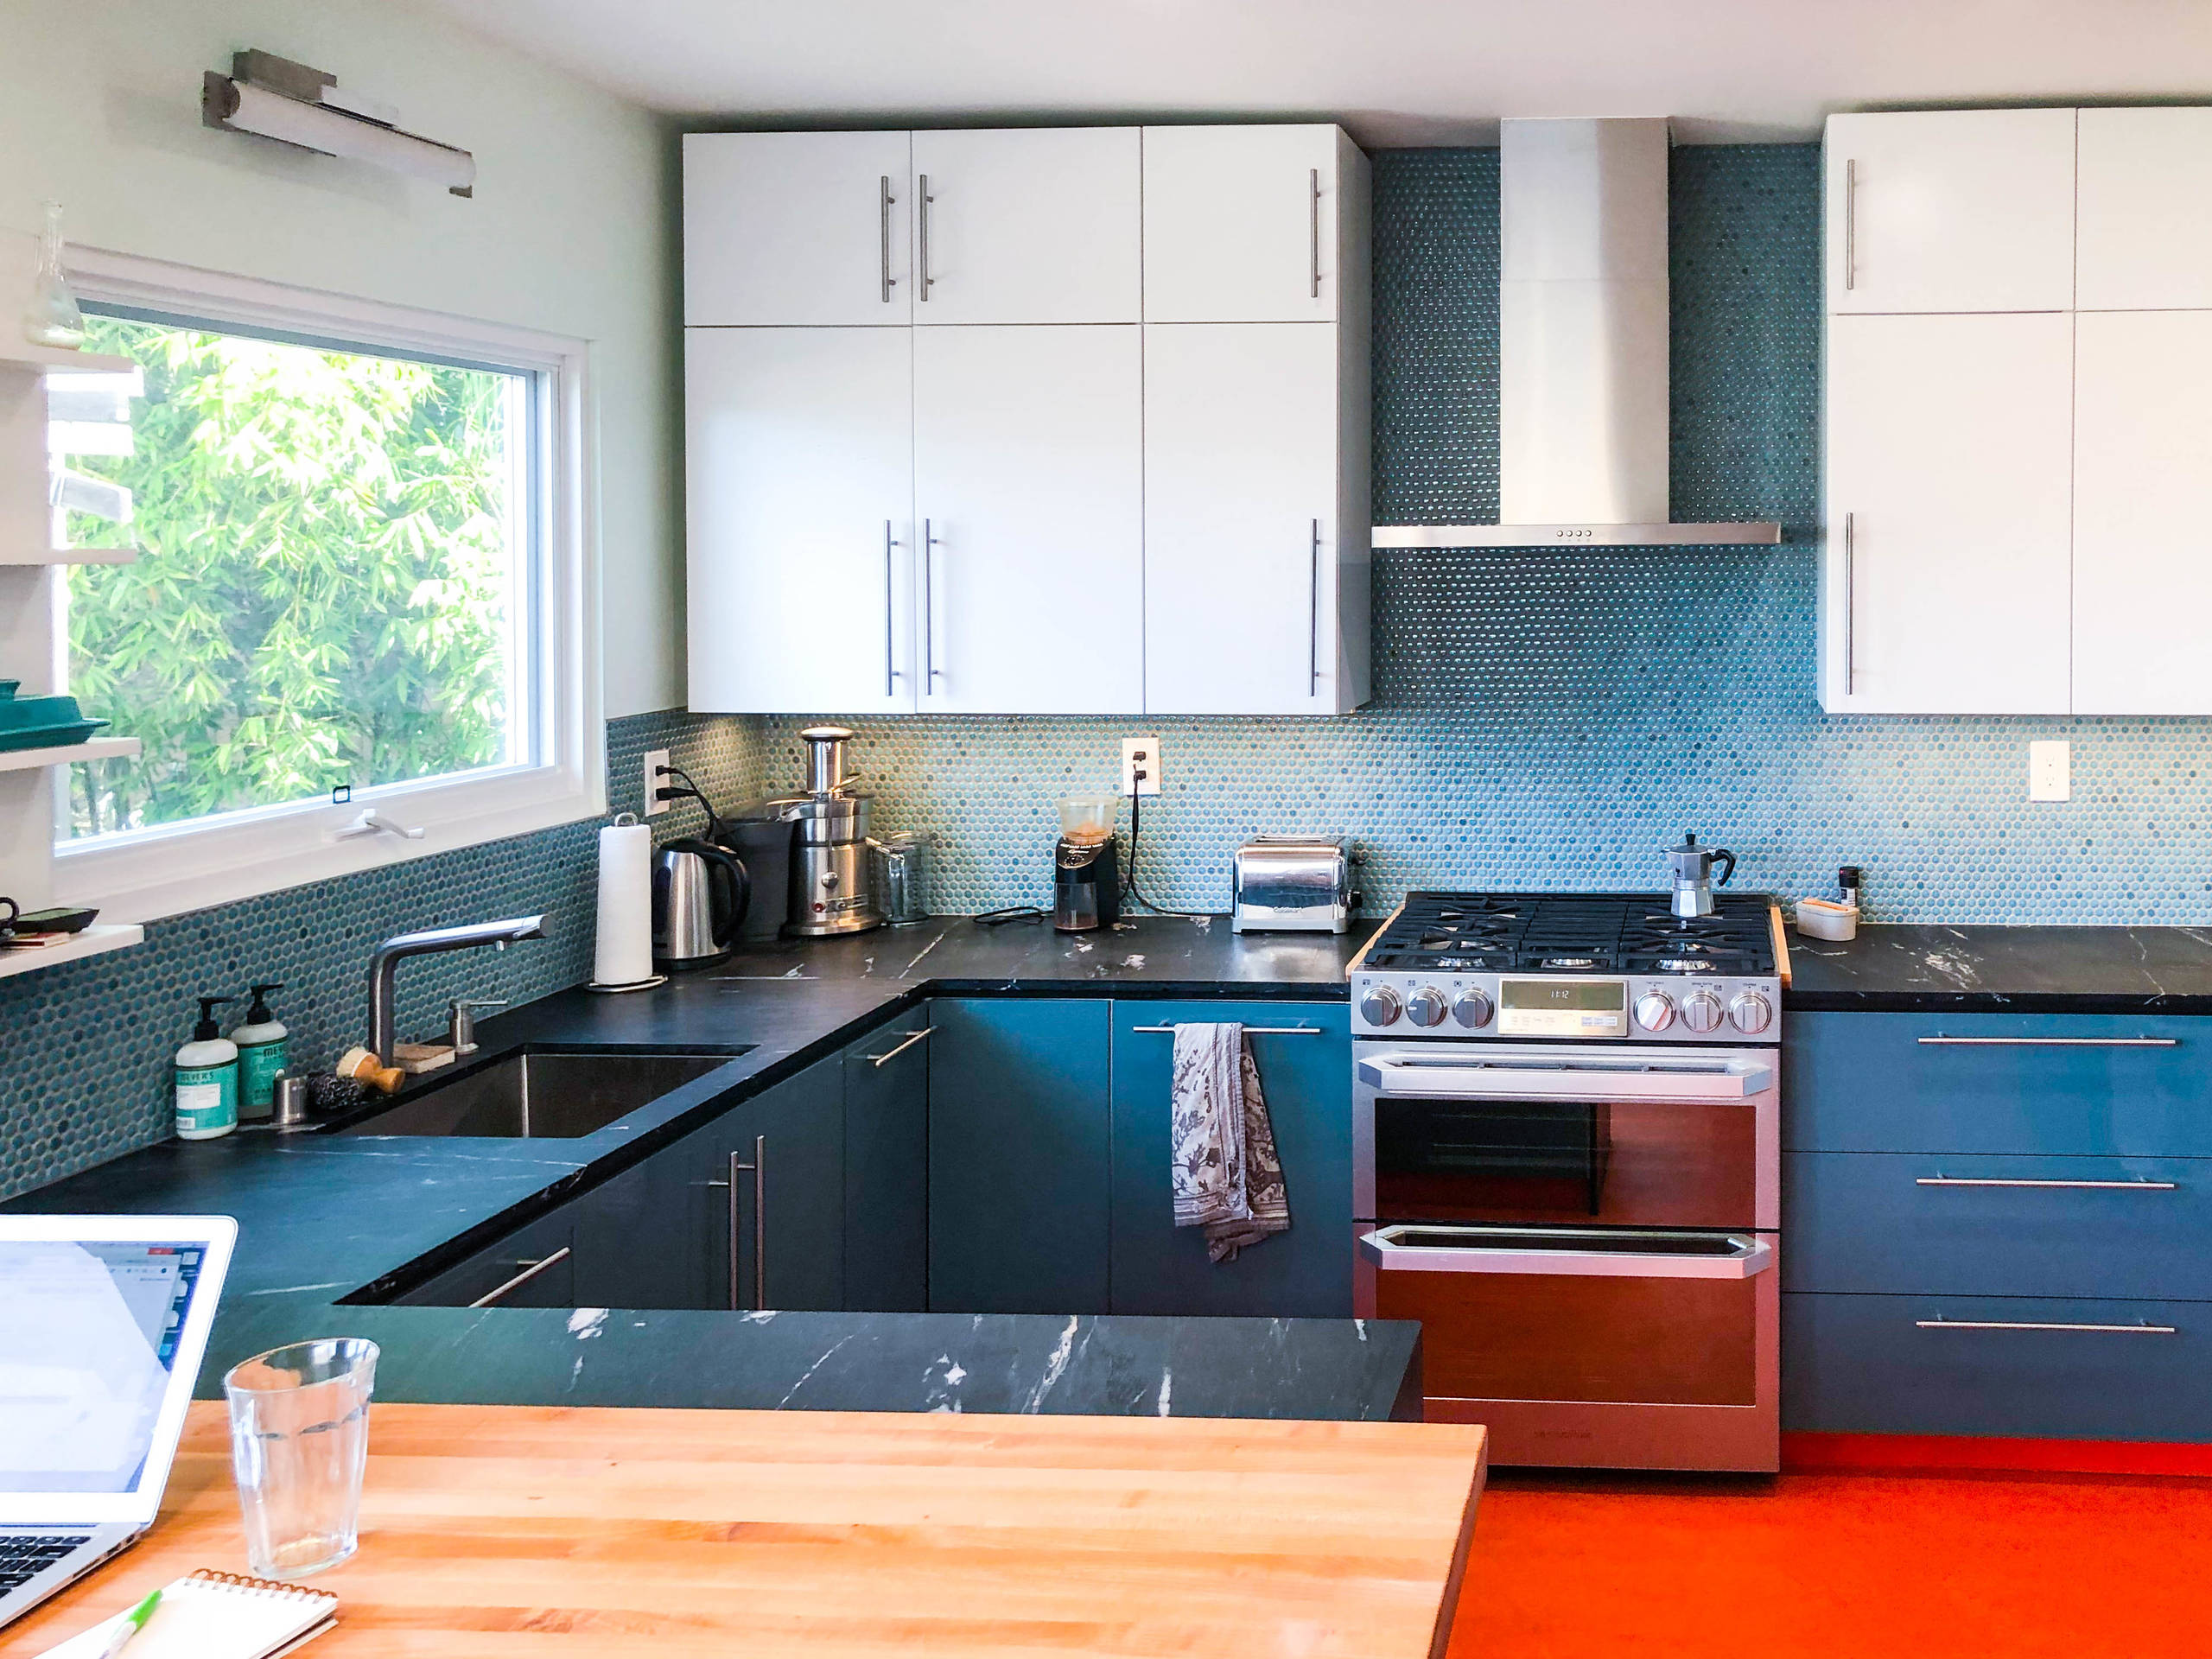 Flooring, Cabinets, Countertops, Tile Backsplash & Paint / Complete Kitchen